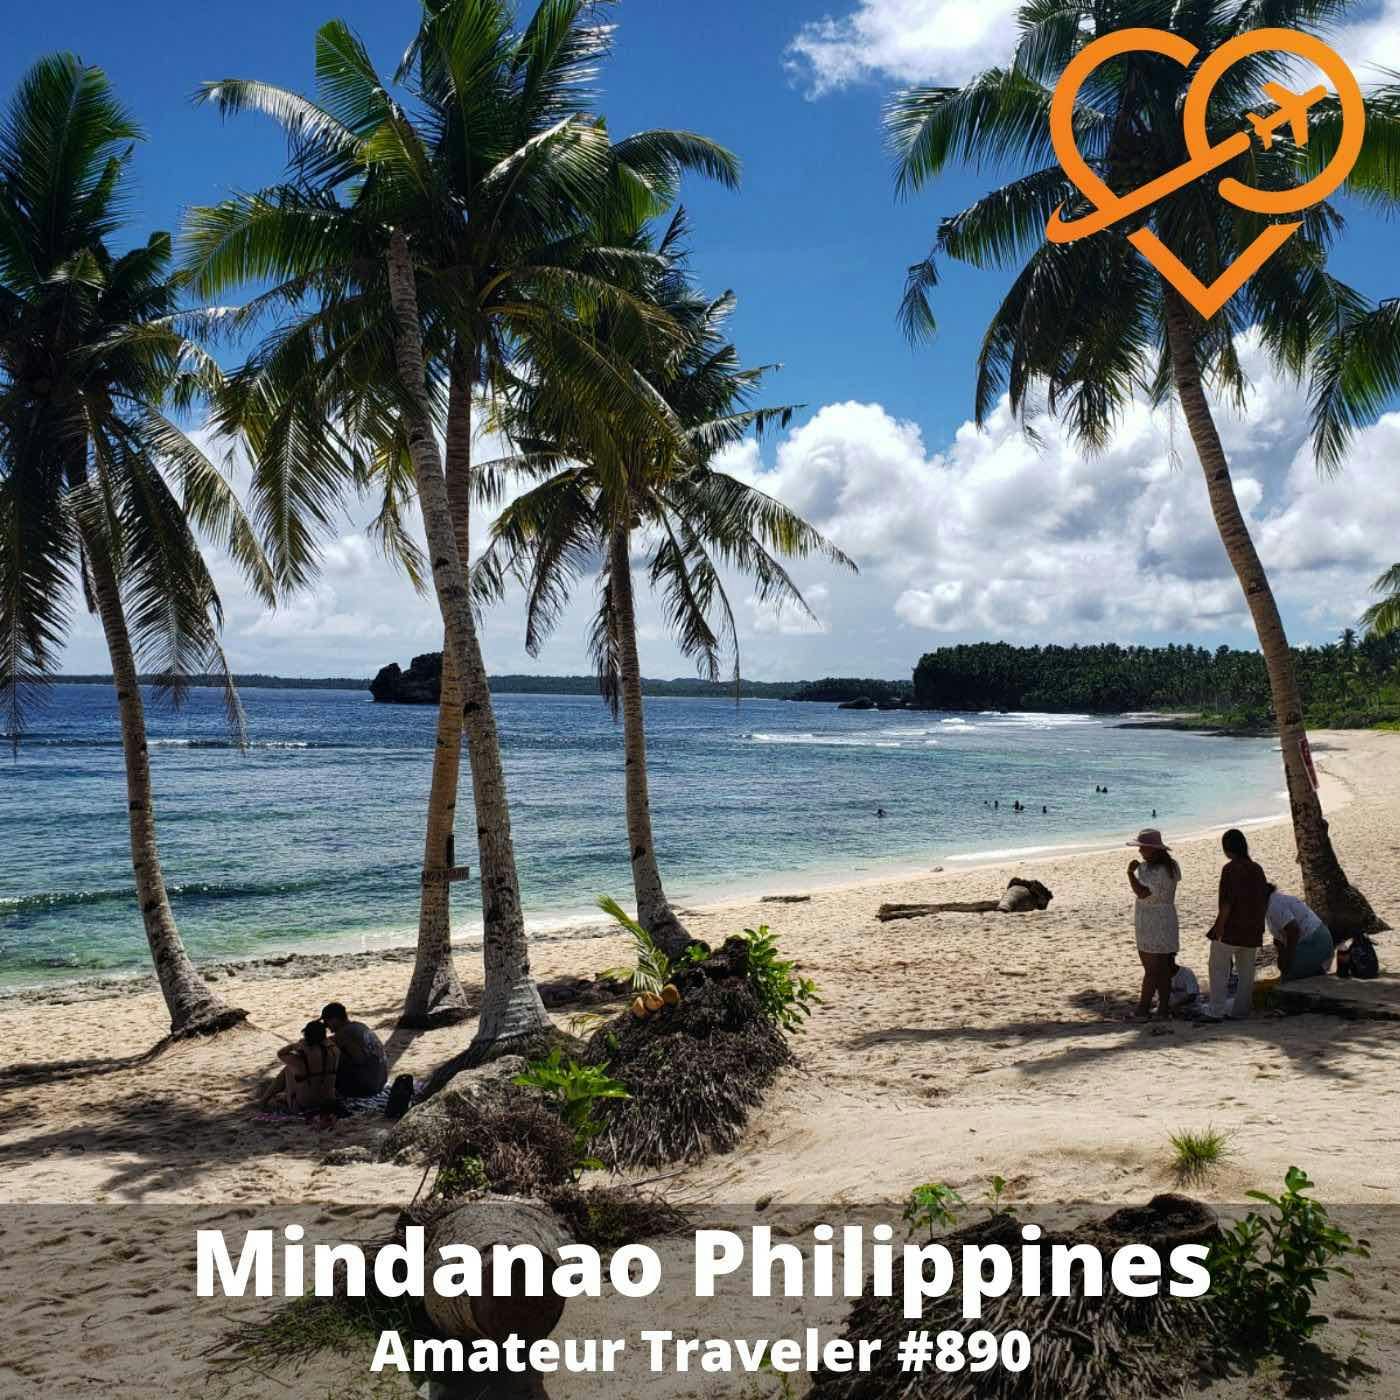 AT#890 - Travel to Mindanao, Philippines